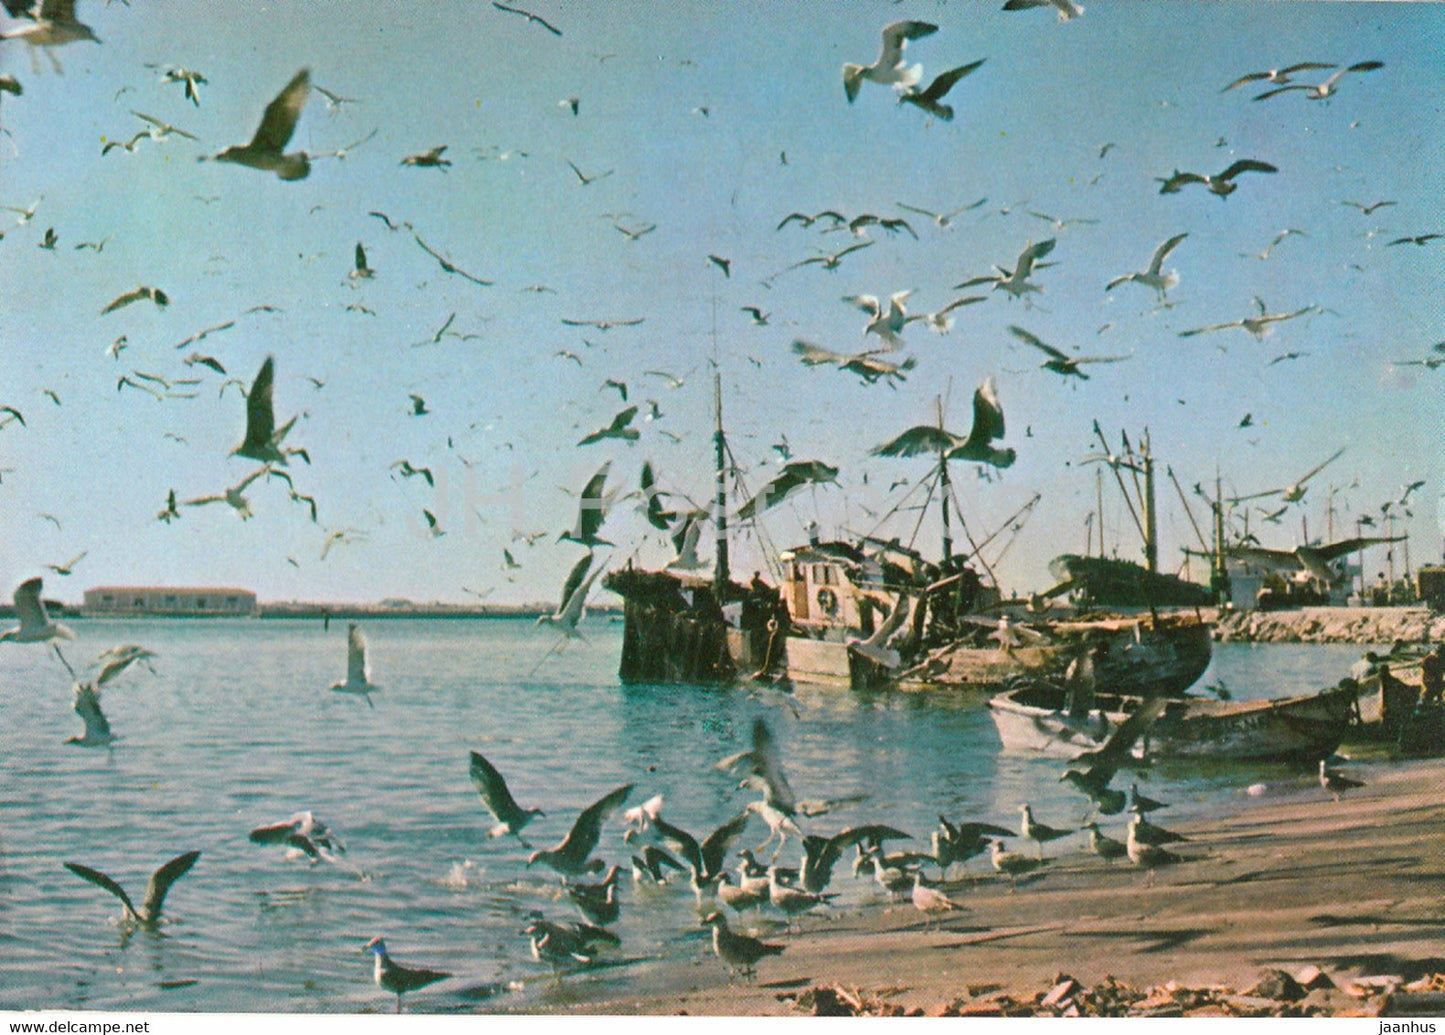 Figueira da Foz - Gaivotas em Terra - Sea Gulls on the Ground - fishing boat - 1978 - Portugal - used - JH Postcards